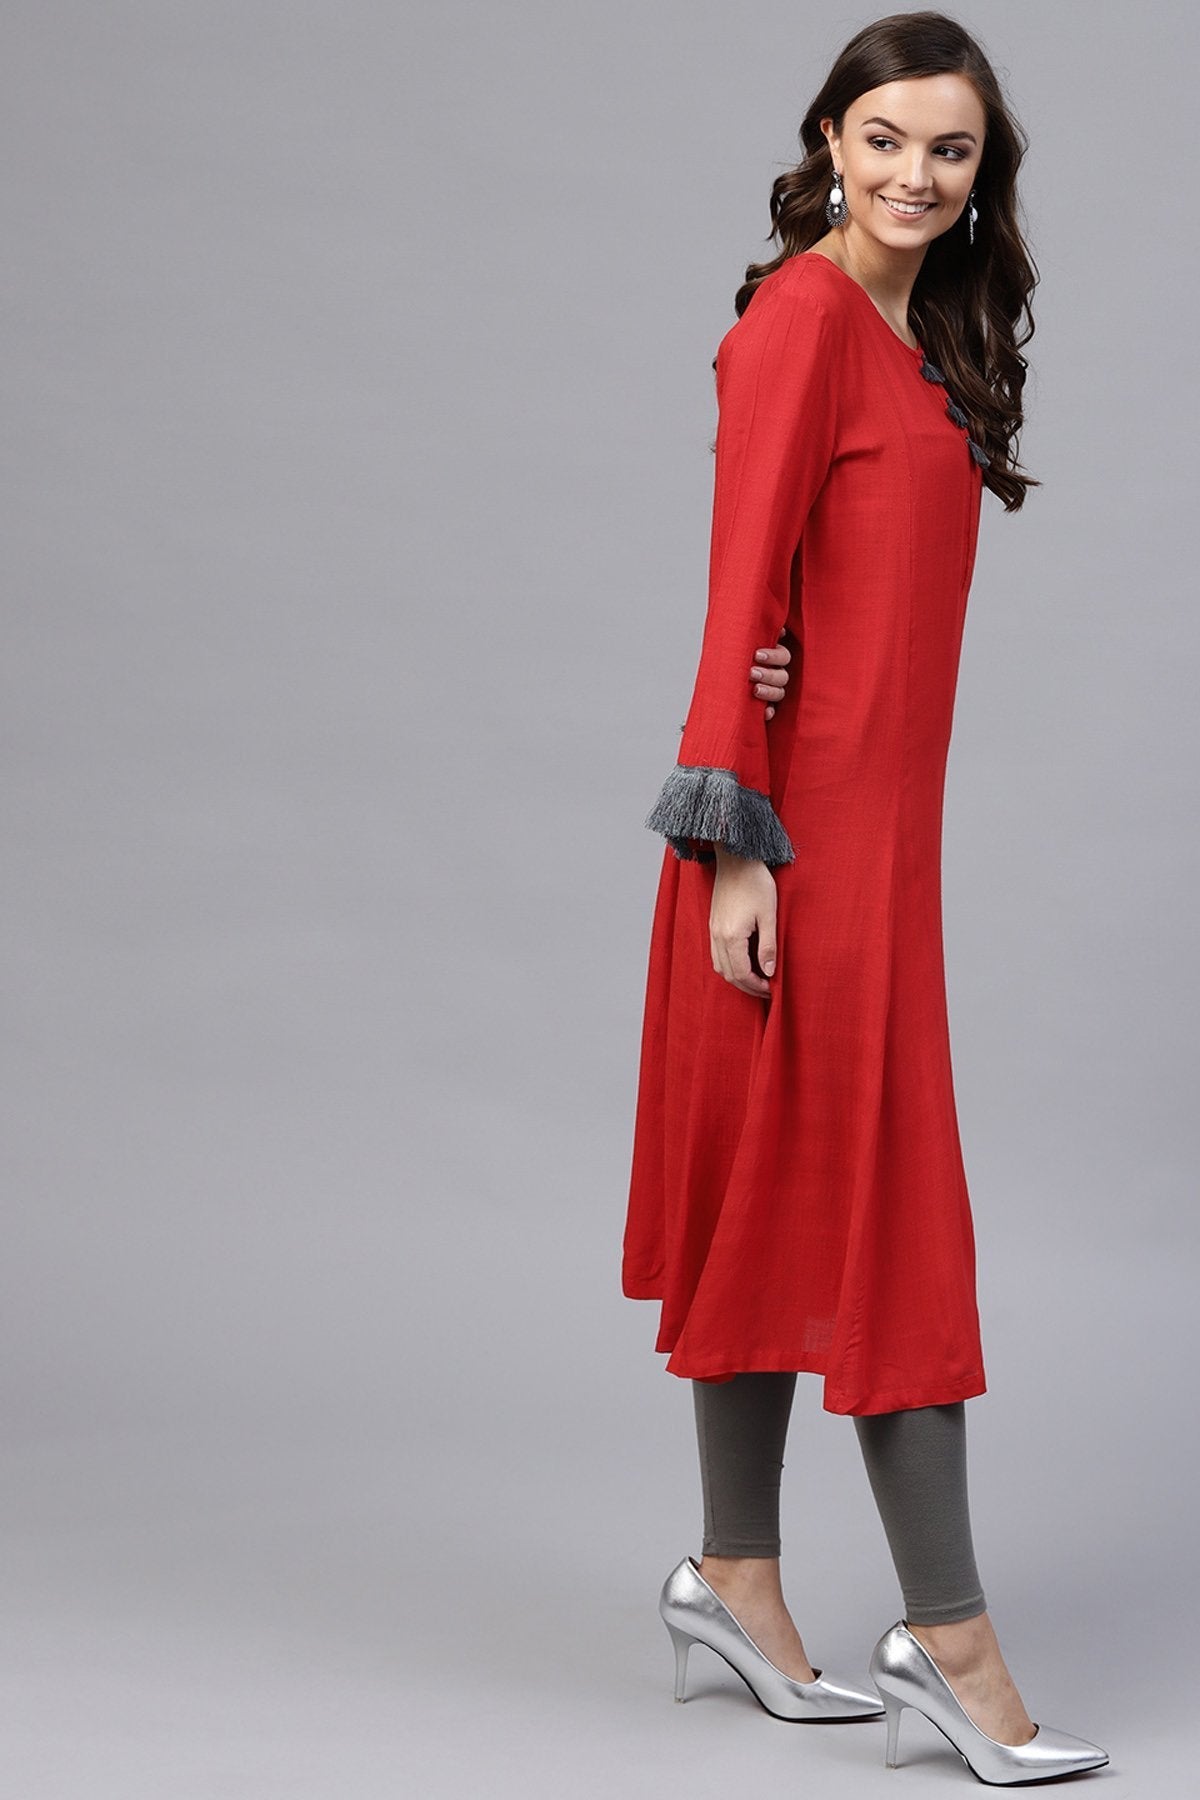 Women's Red Fringed Sleeves Kurta - SHAE